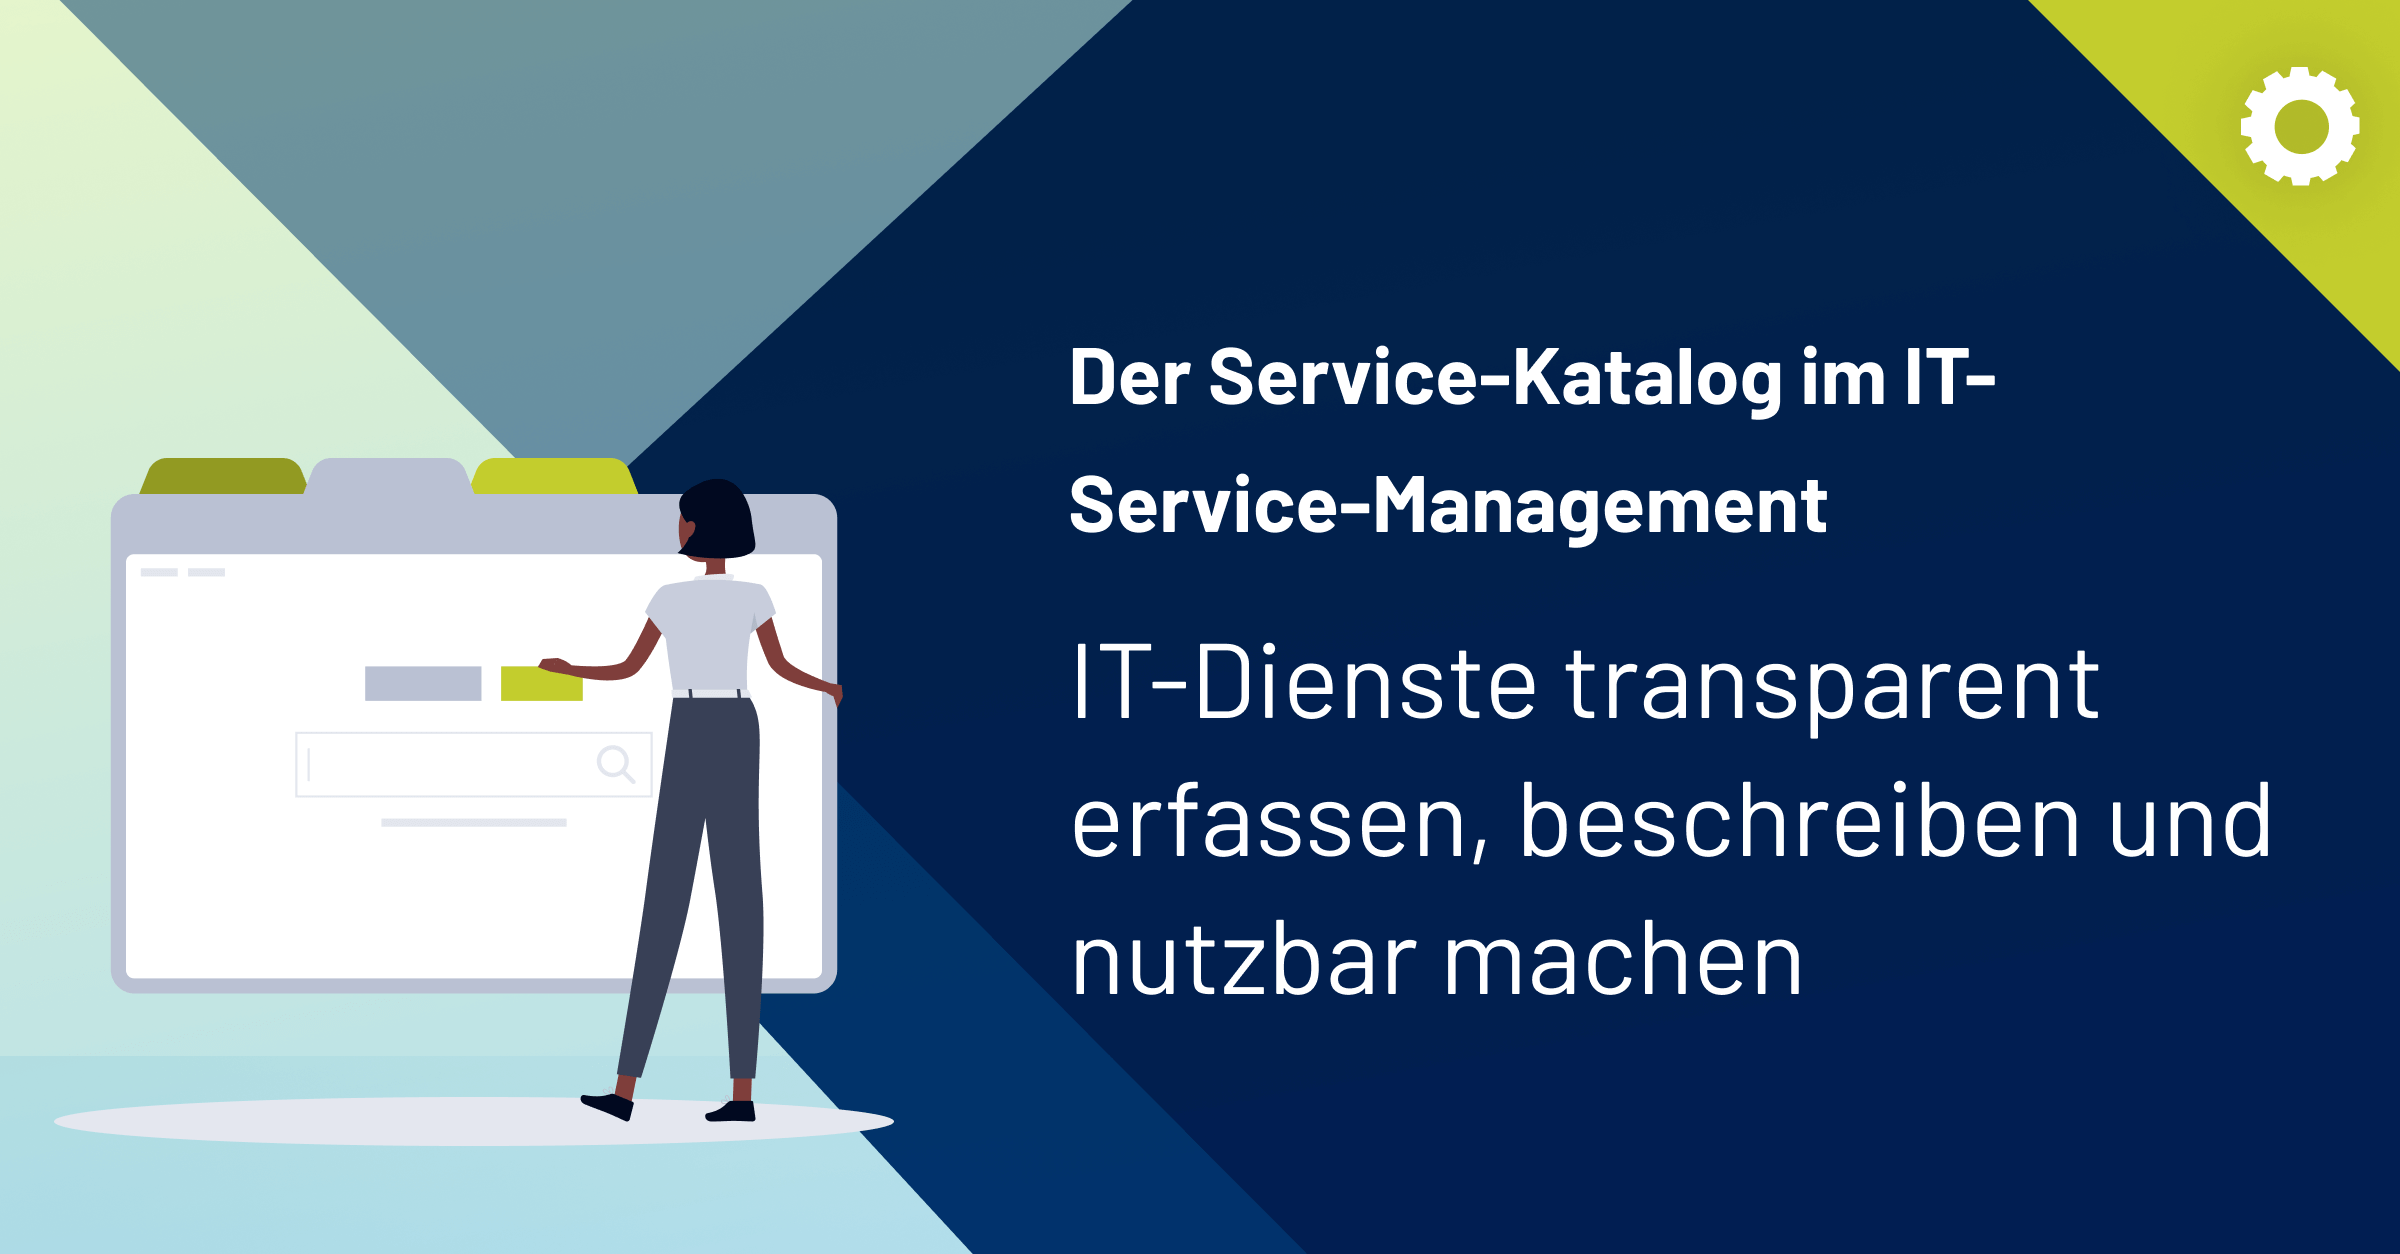 Der Service-Katalog im IT-Service-Management